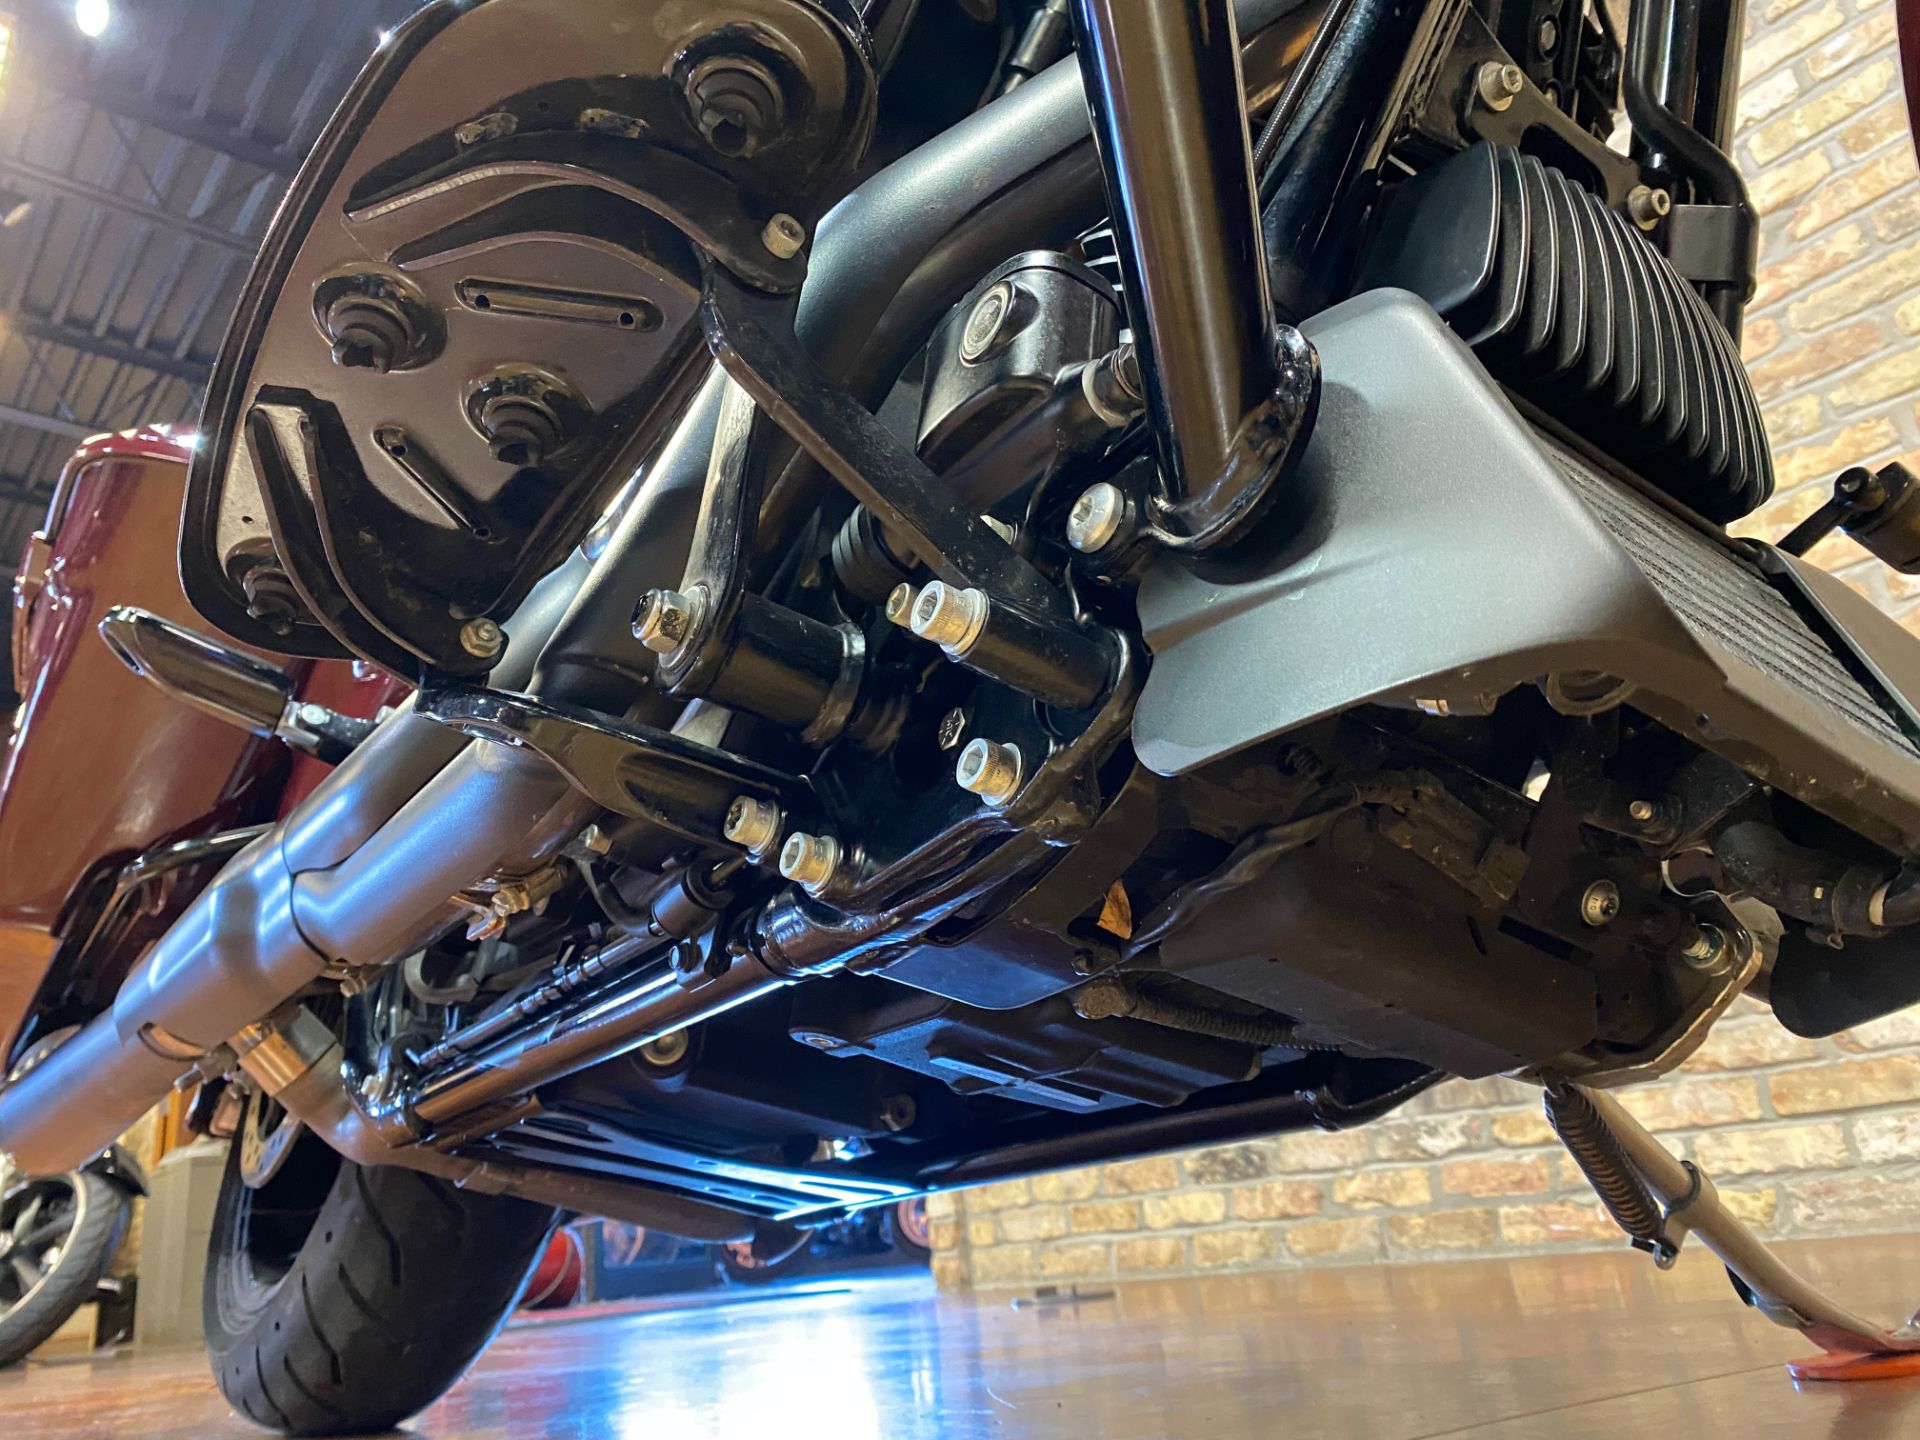 2020 Harley-Davidson Street Glide® Special in Big Bend, Wisconsin - Photo 15